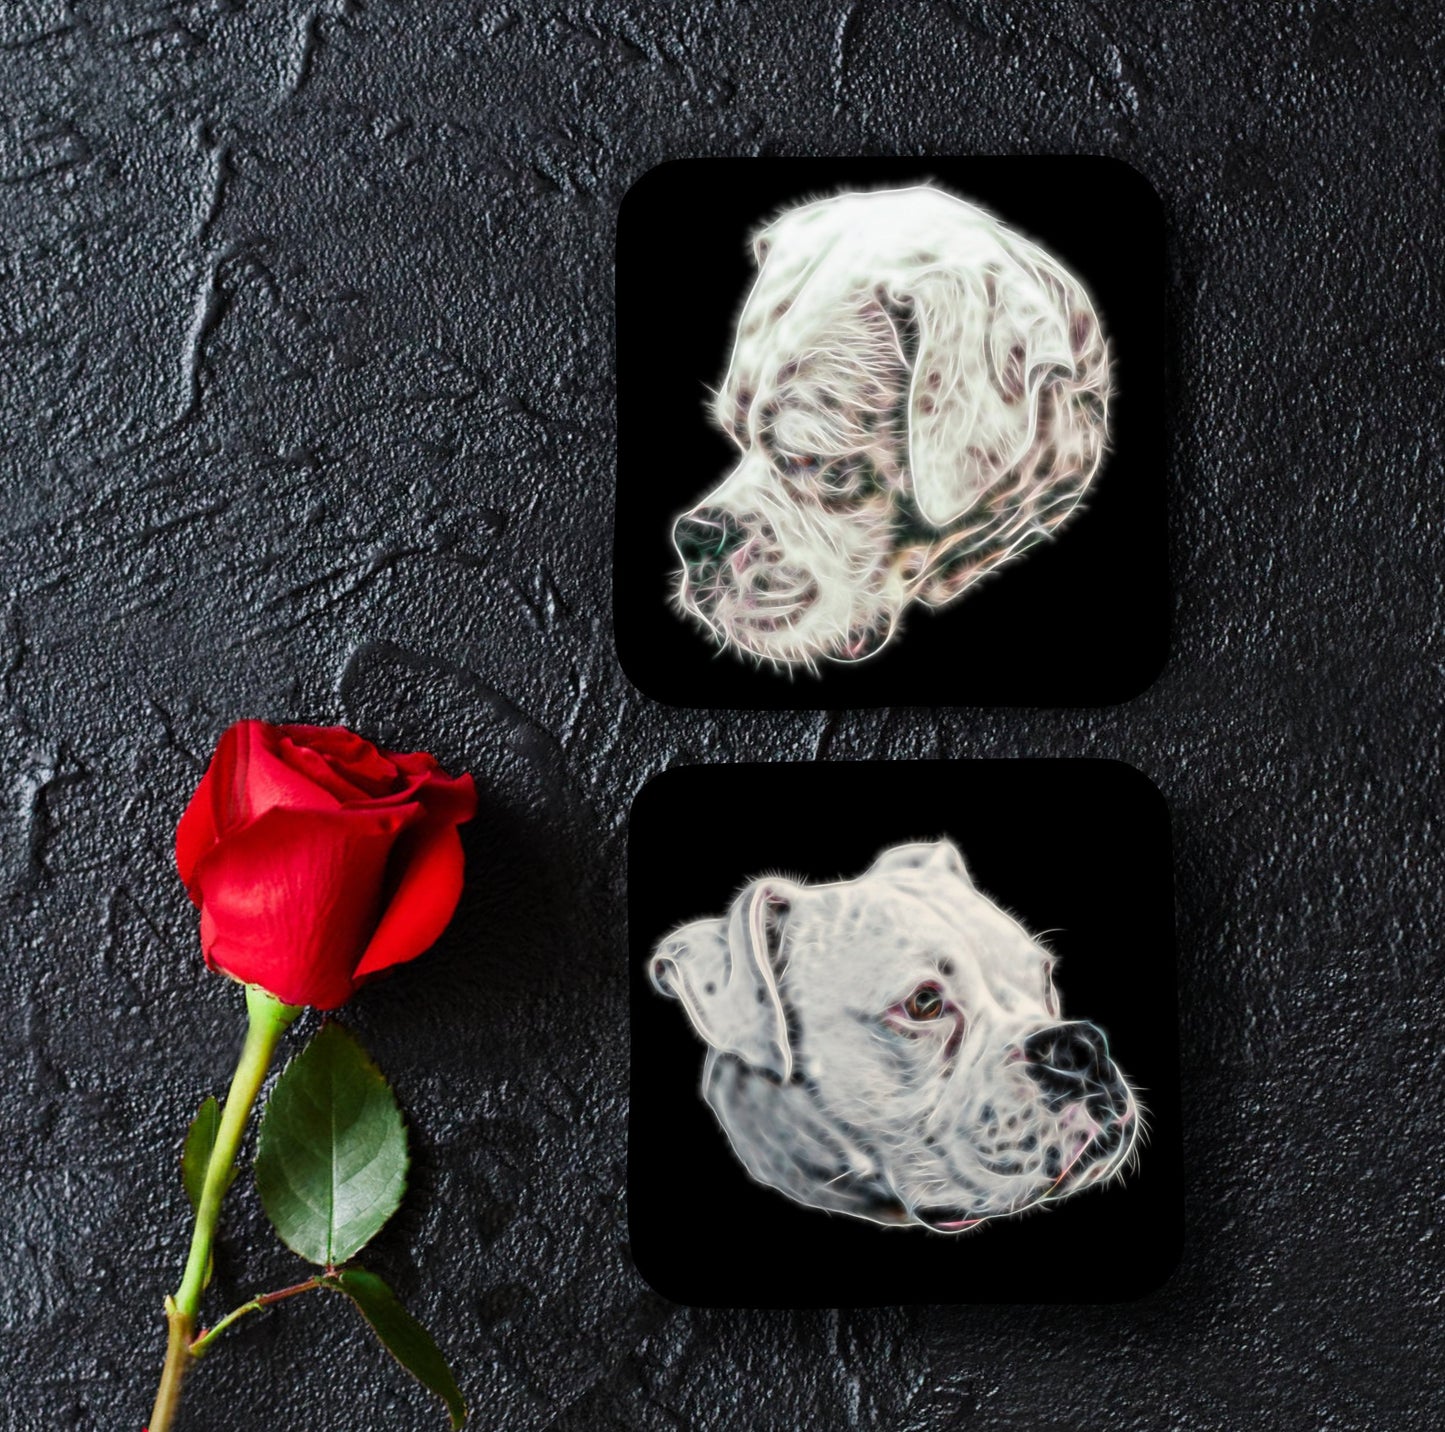 White Boxer Dog Coasters, Set of 2, with Stunning Fractal Art Design.